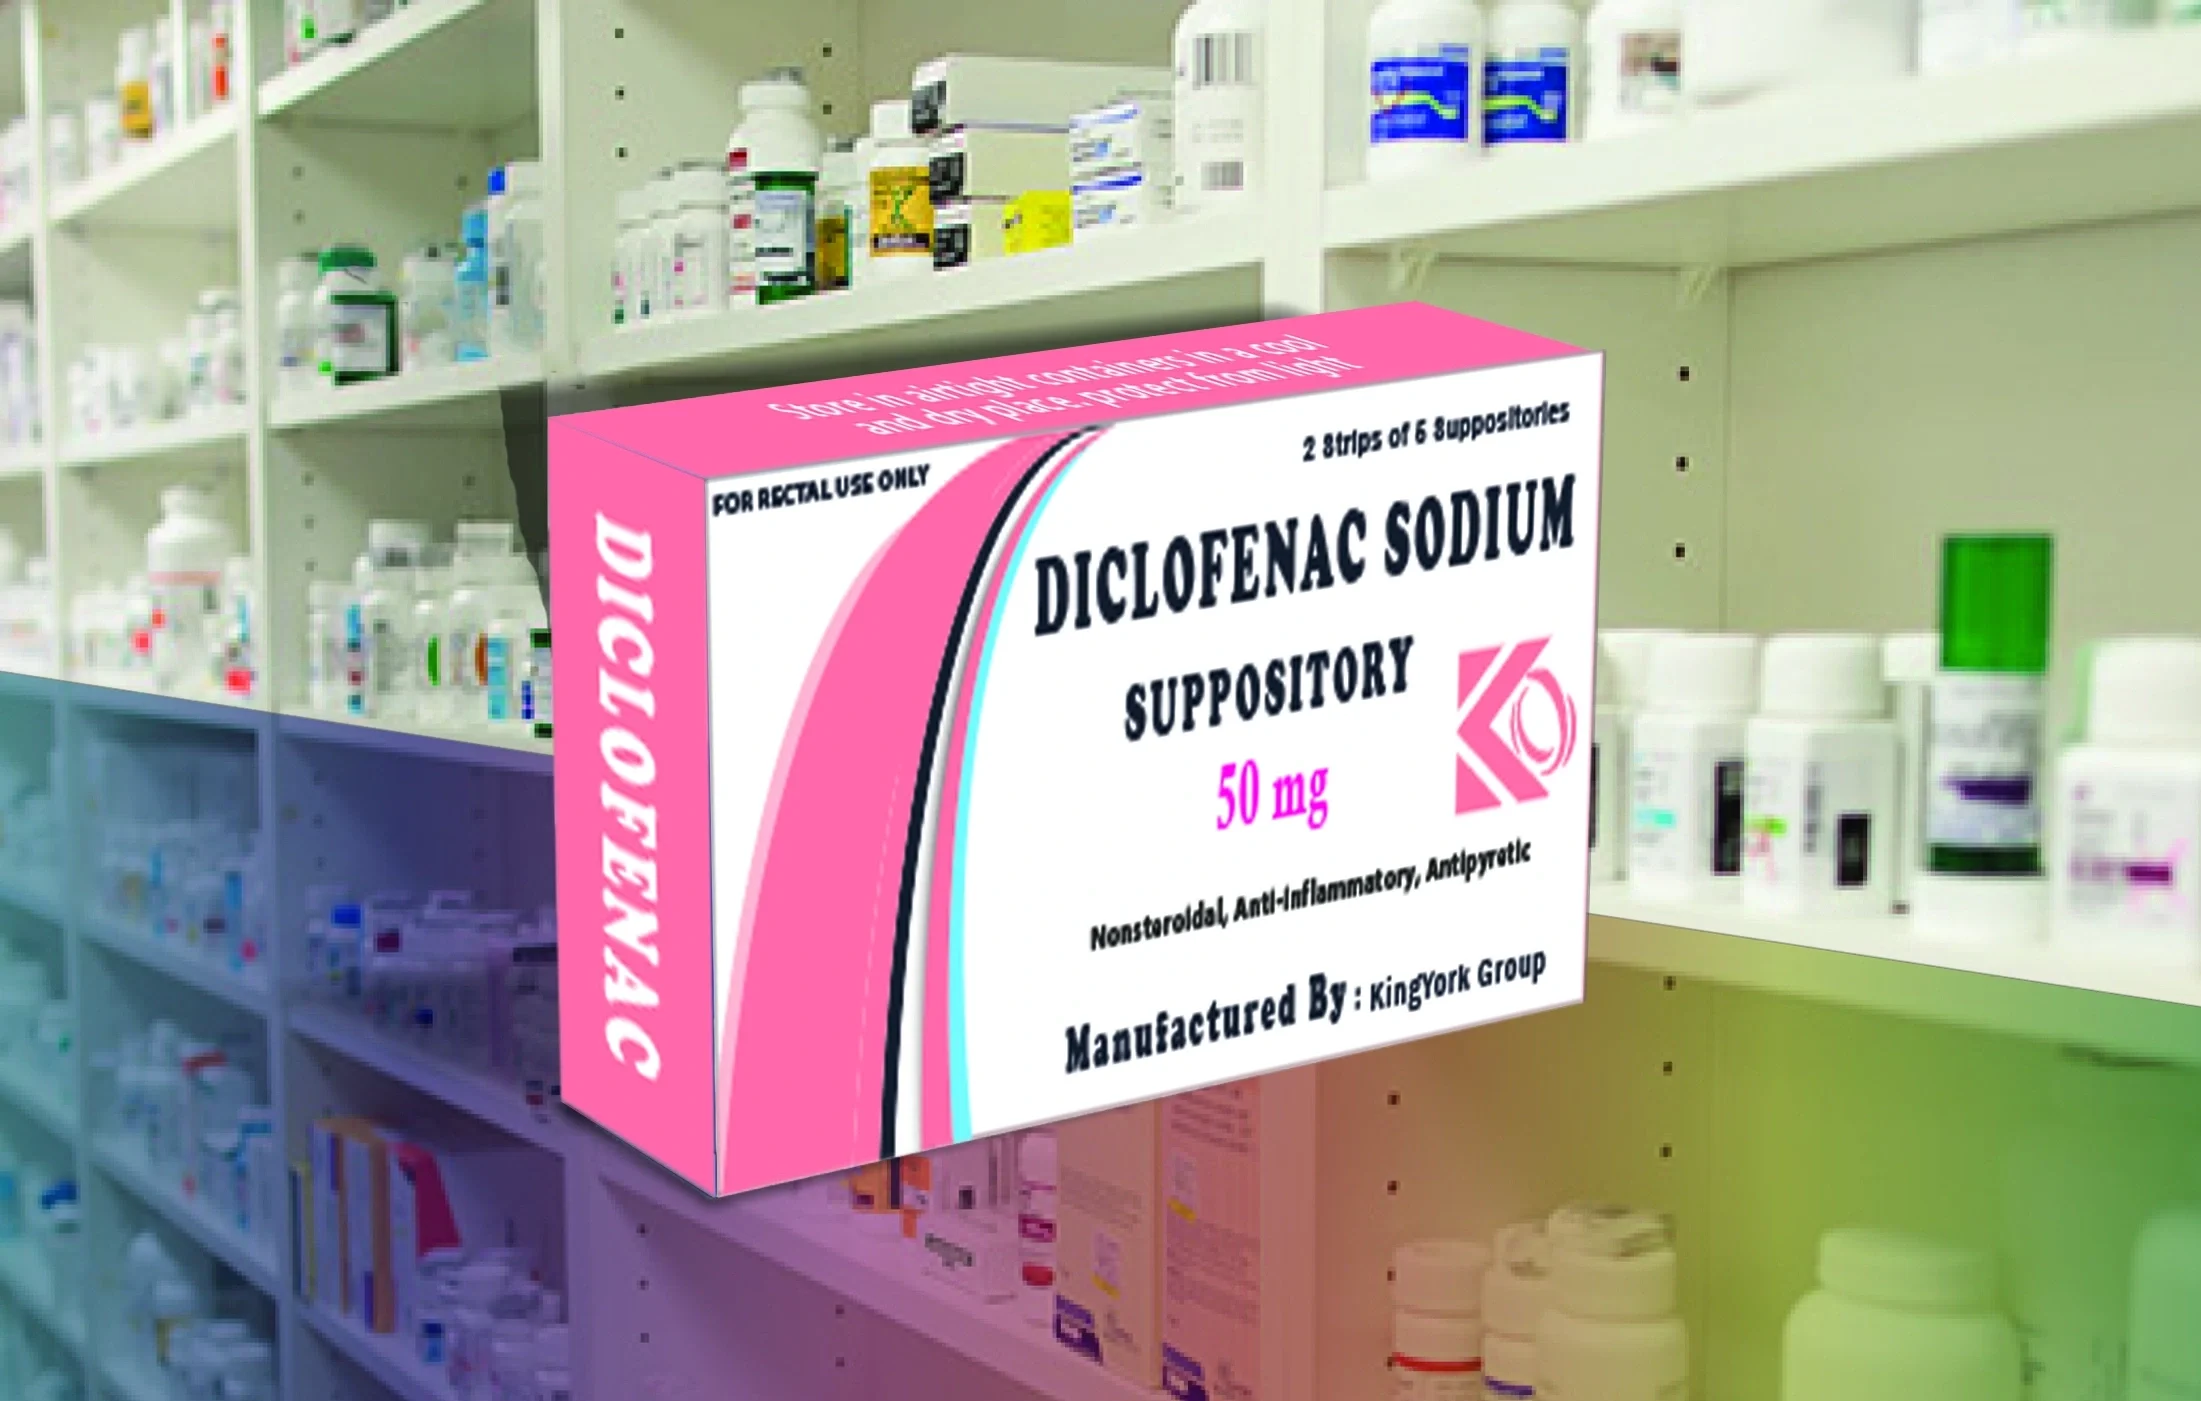 'diclofenac suppository', 'analgesic suppository', 'diclofenac suppository'